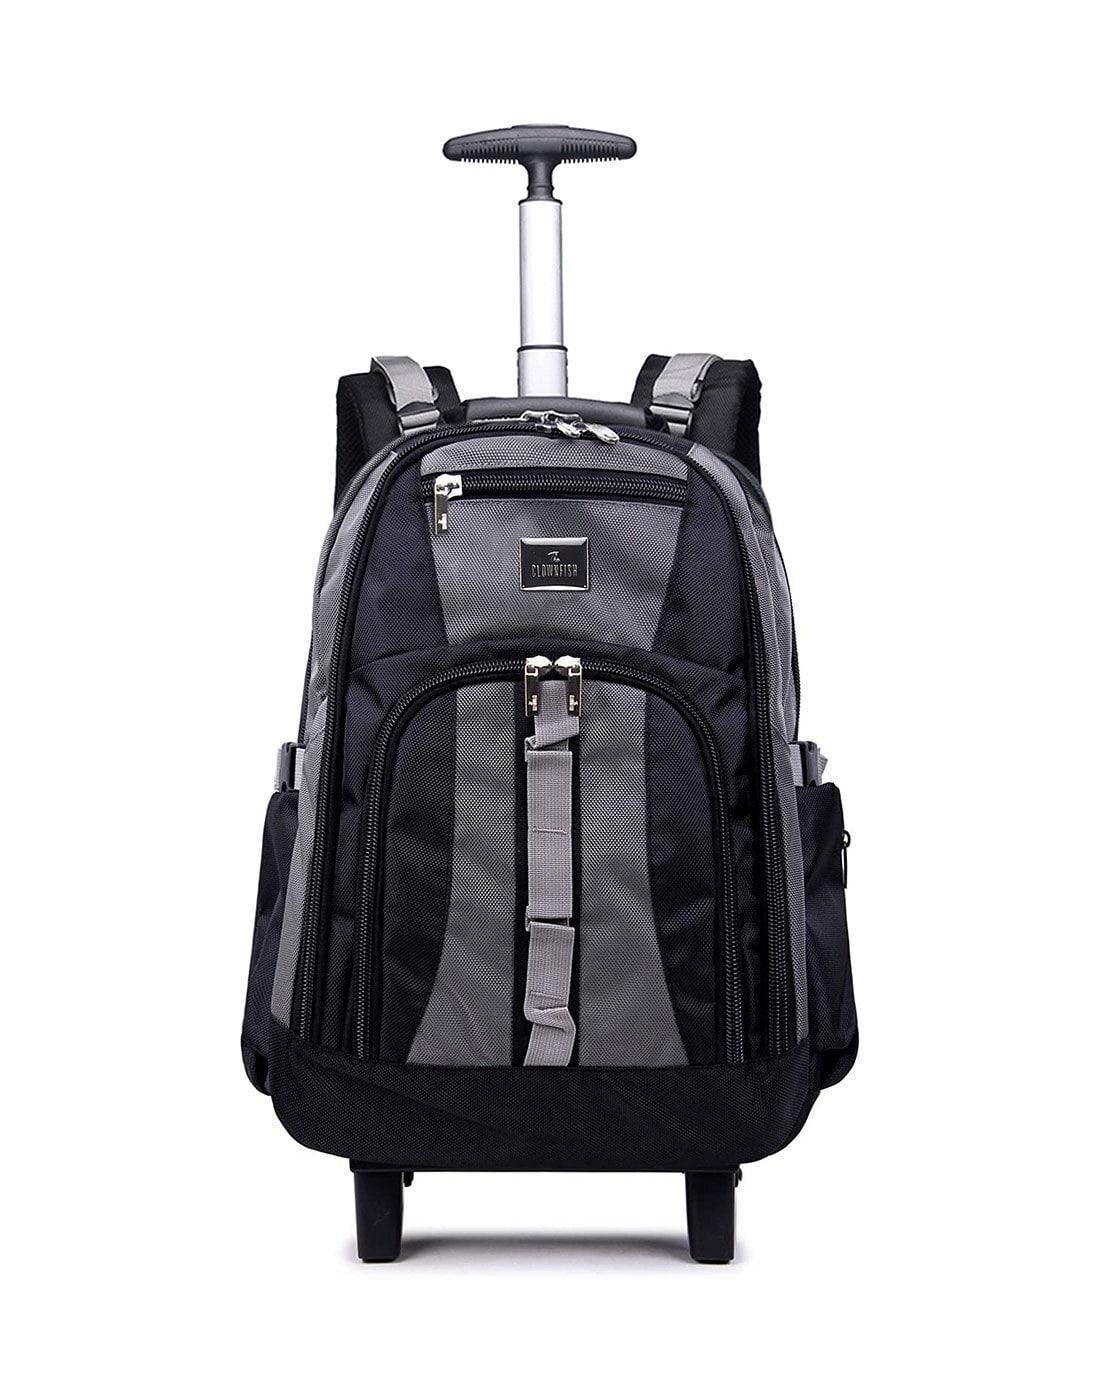 GOBIG and Black GOBIG USB Charge Antitheft Backpack Men Travel Bags